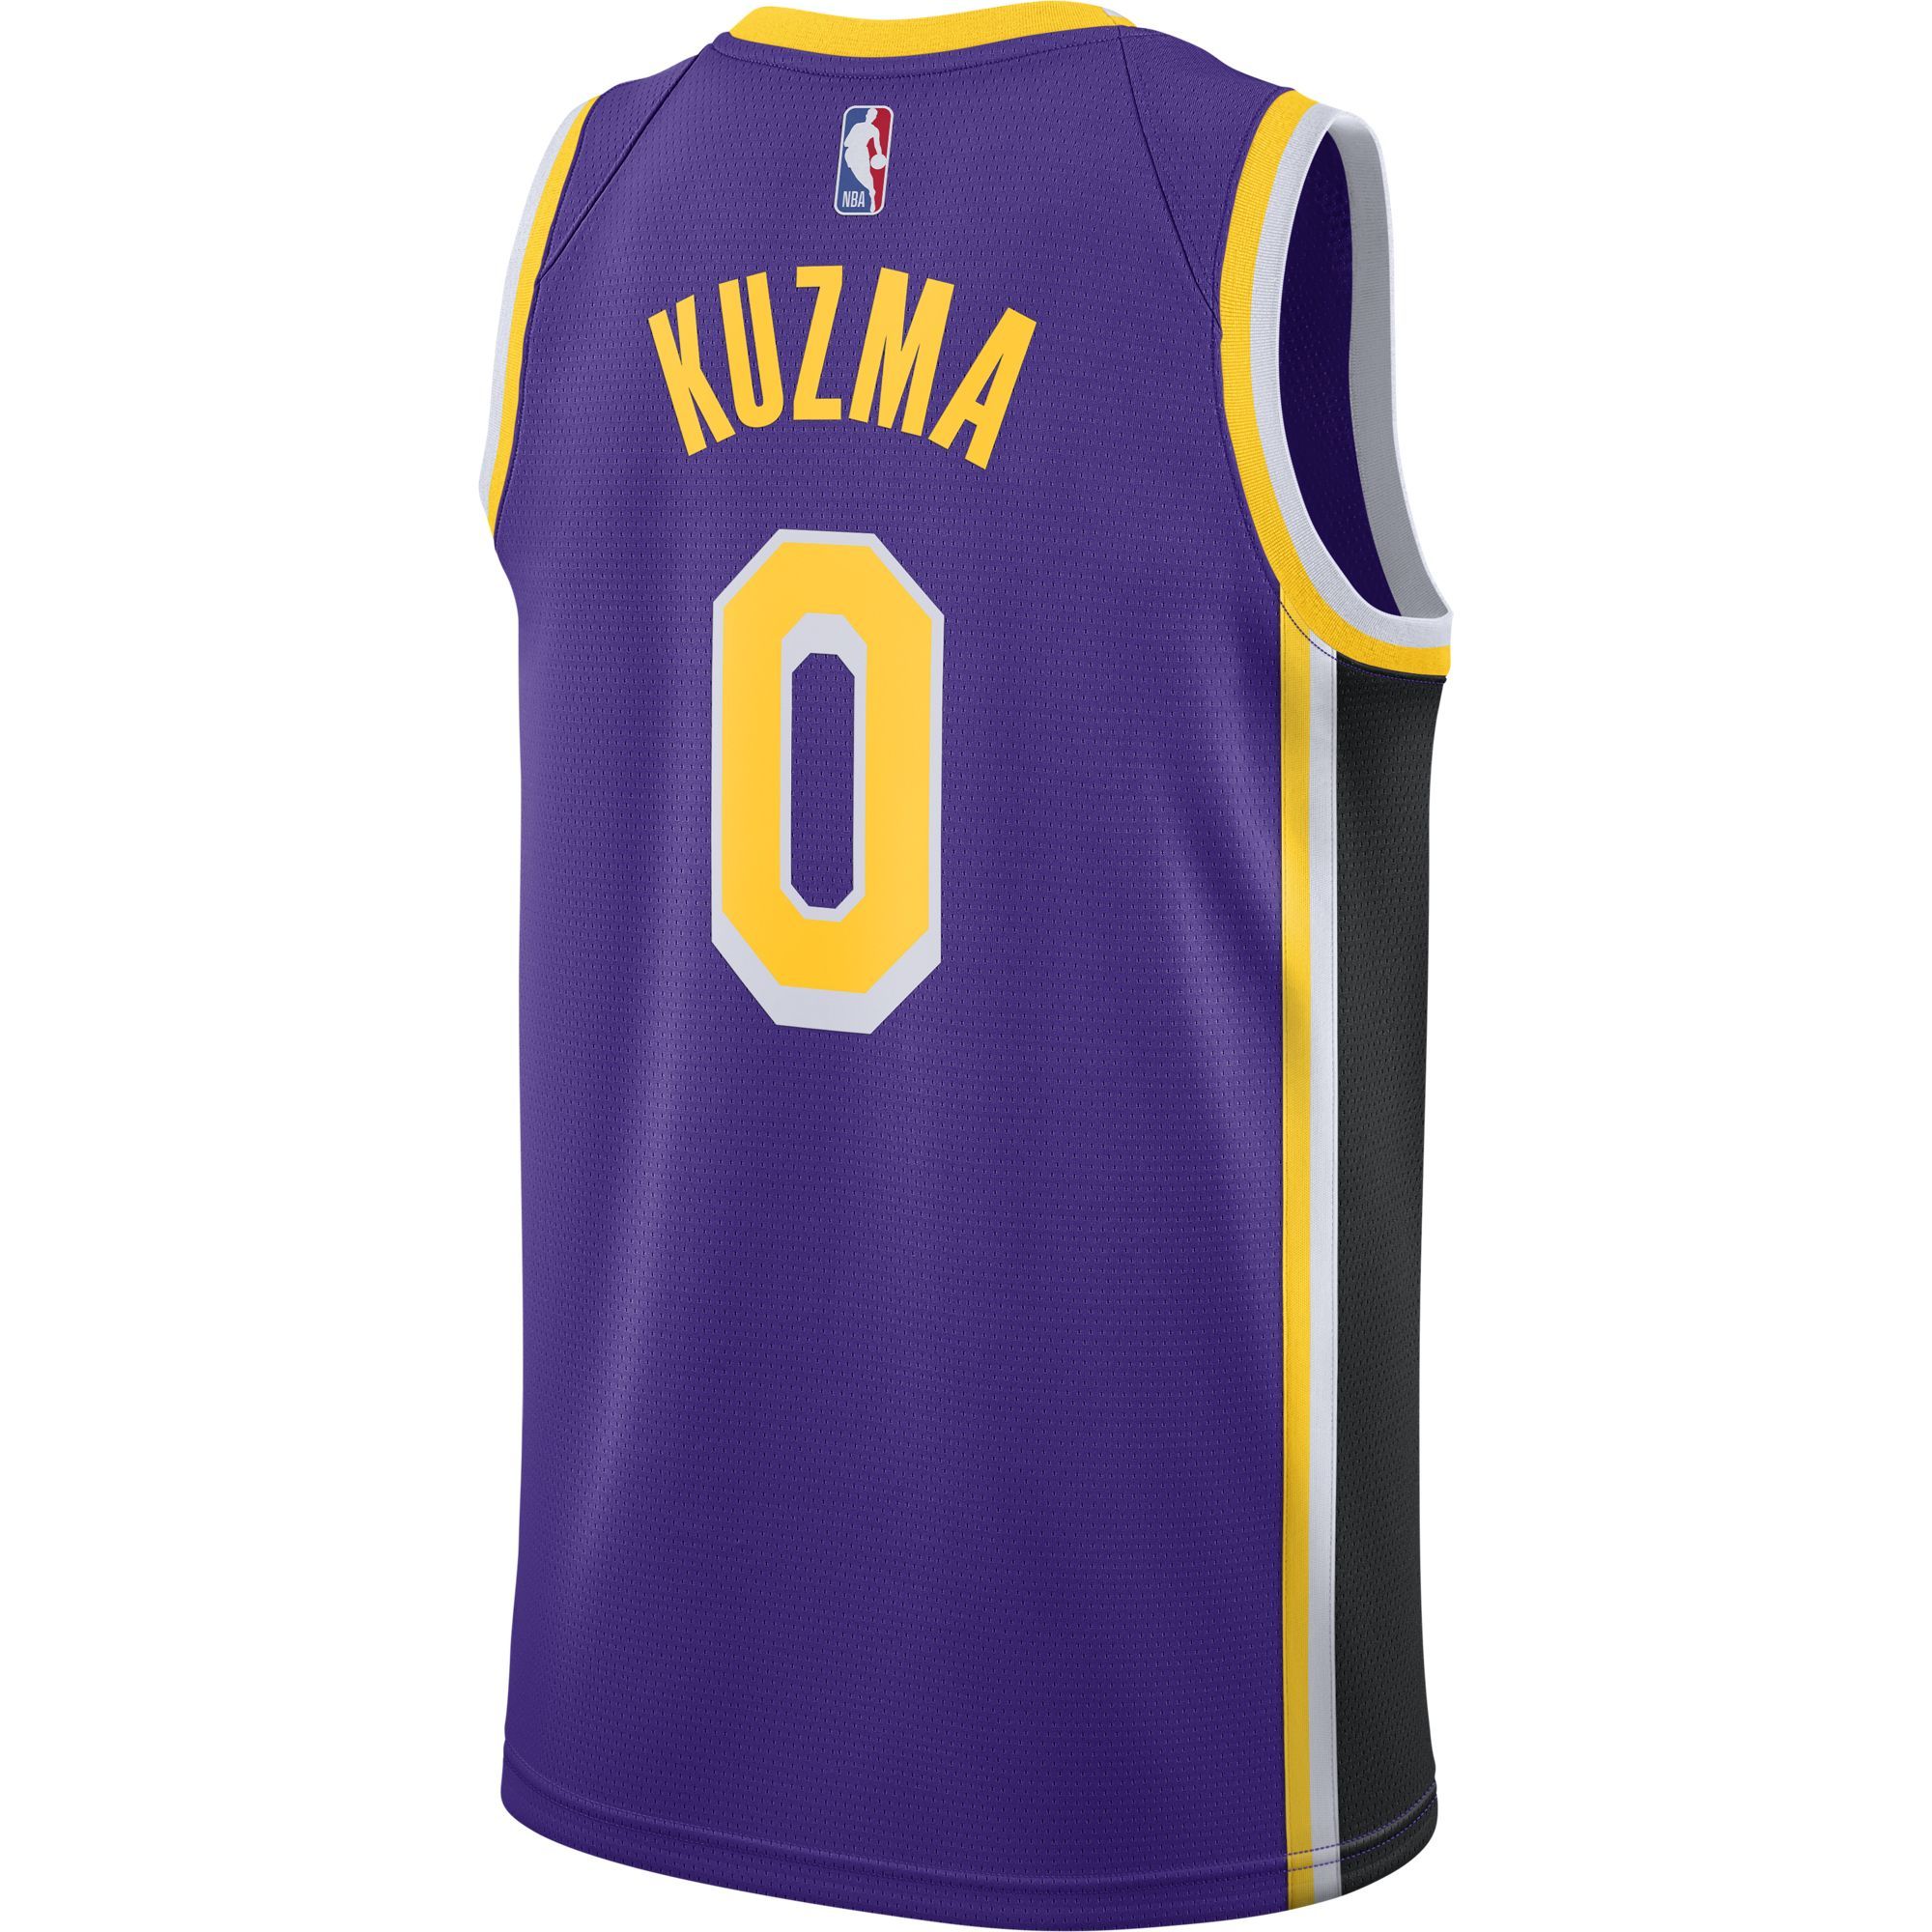 KUZMA PUMA SHIRT Los Angeles Lakers - Los Angeles Lakers - Ellie Shirt